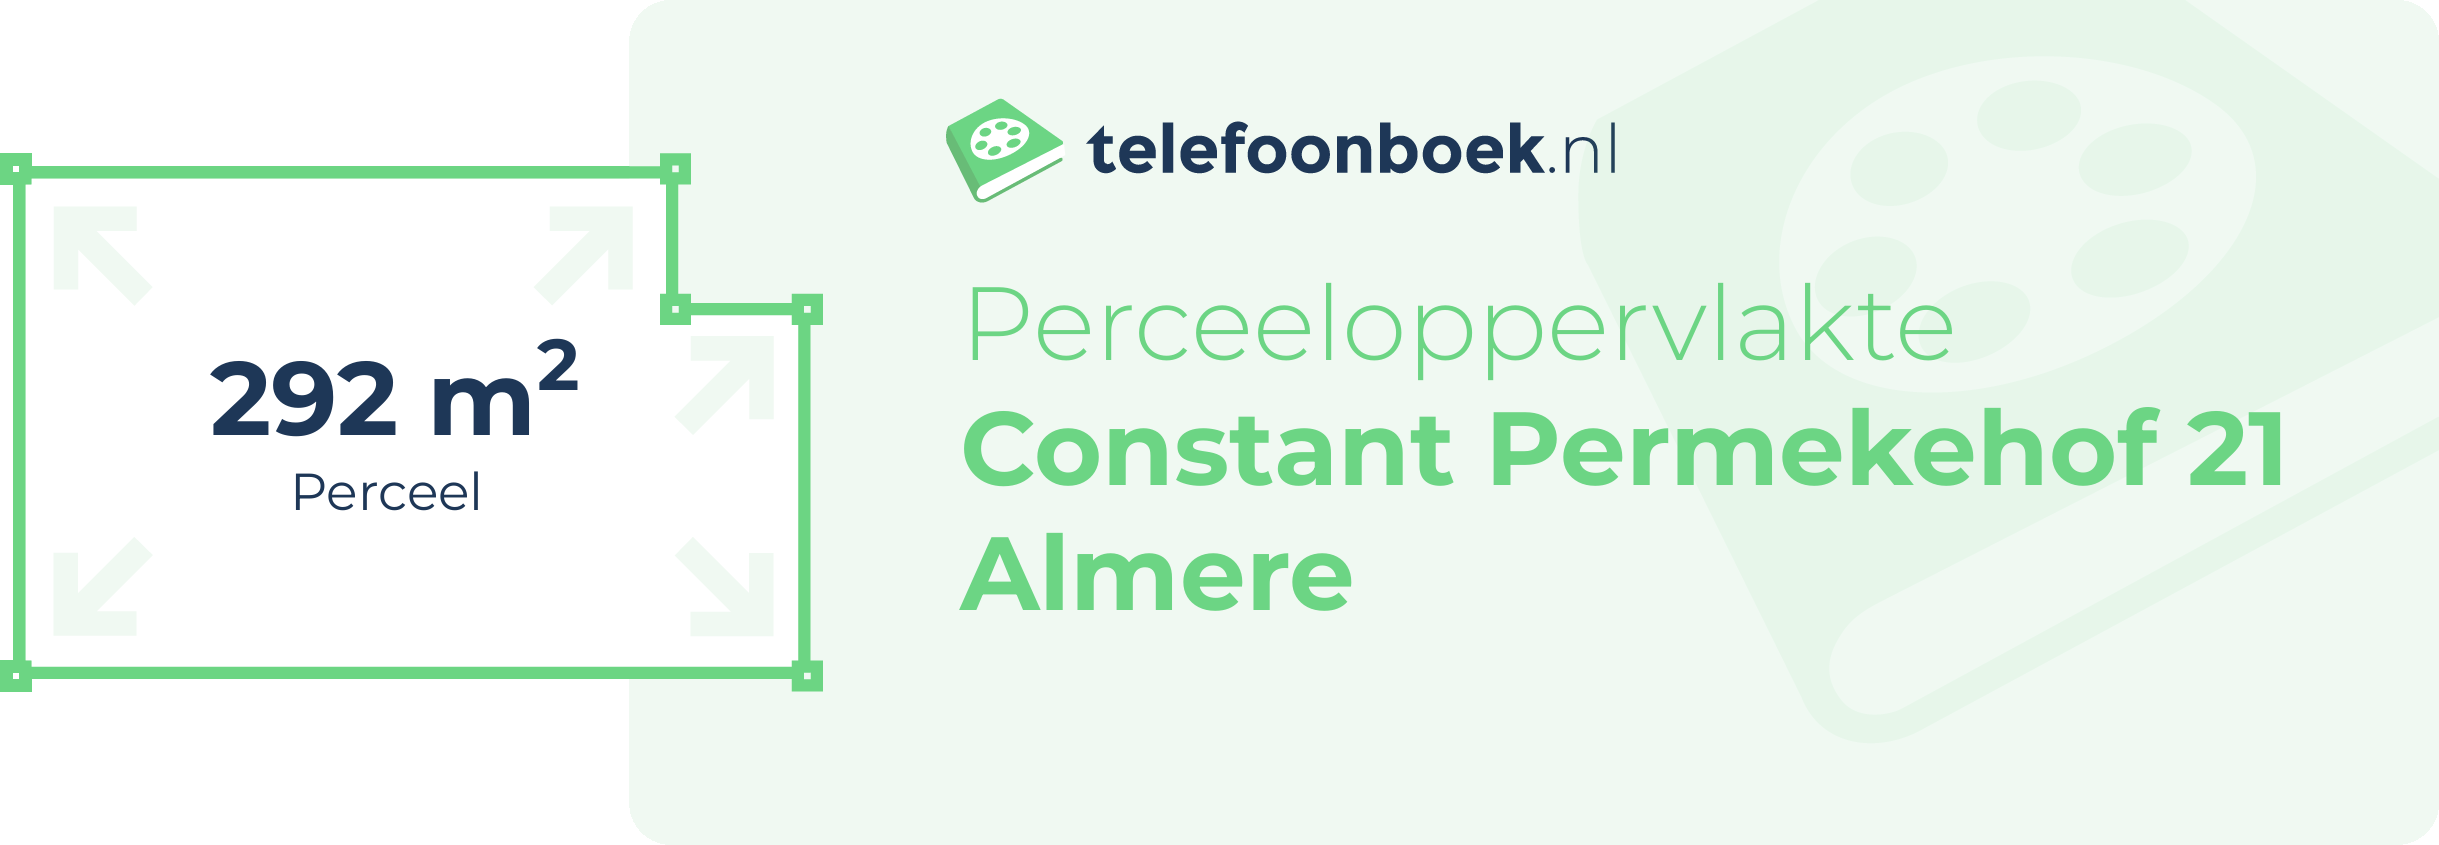 Perceeloppervlakte Constant Permekehof 21 Almere